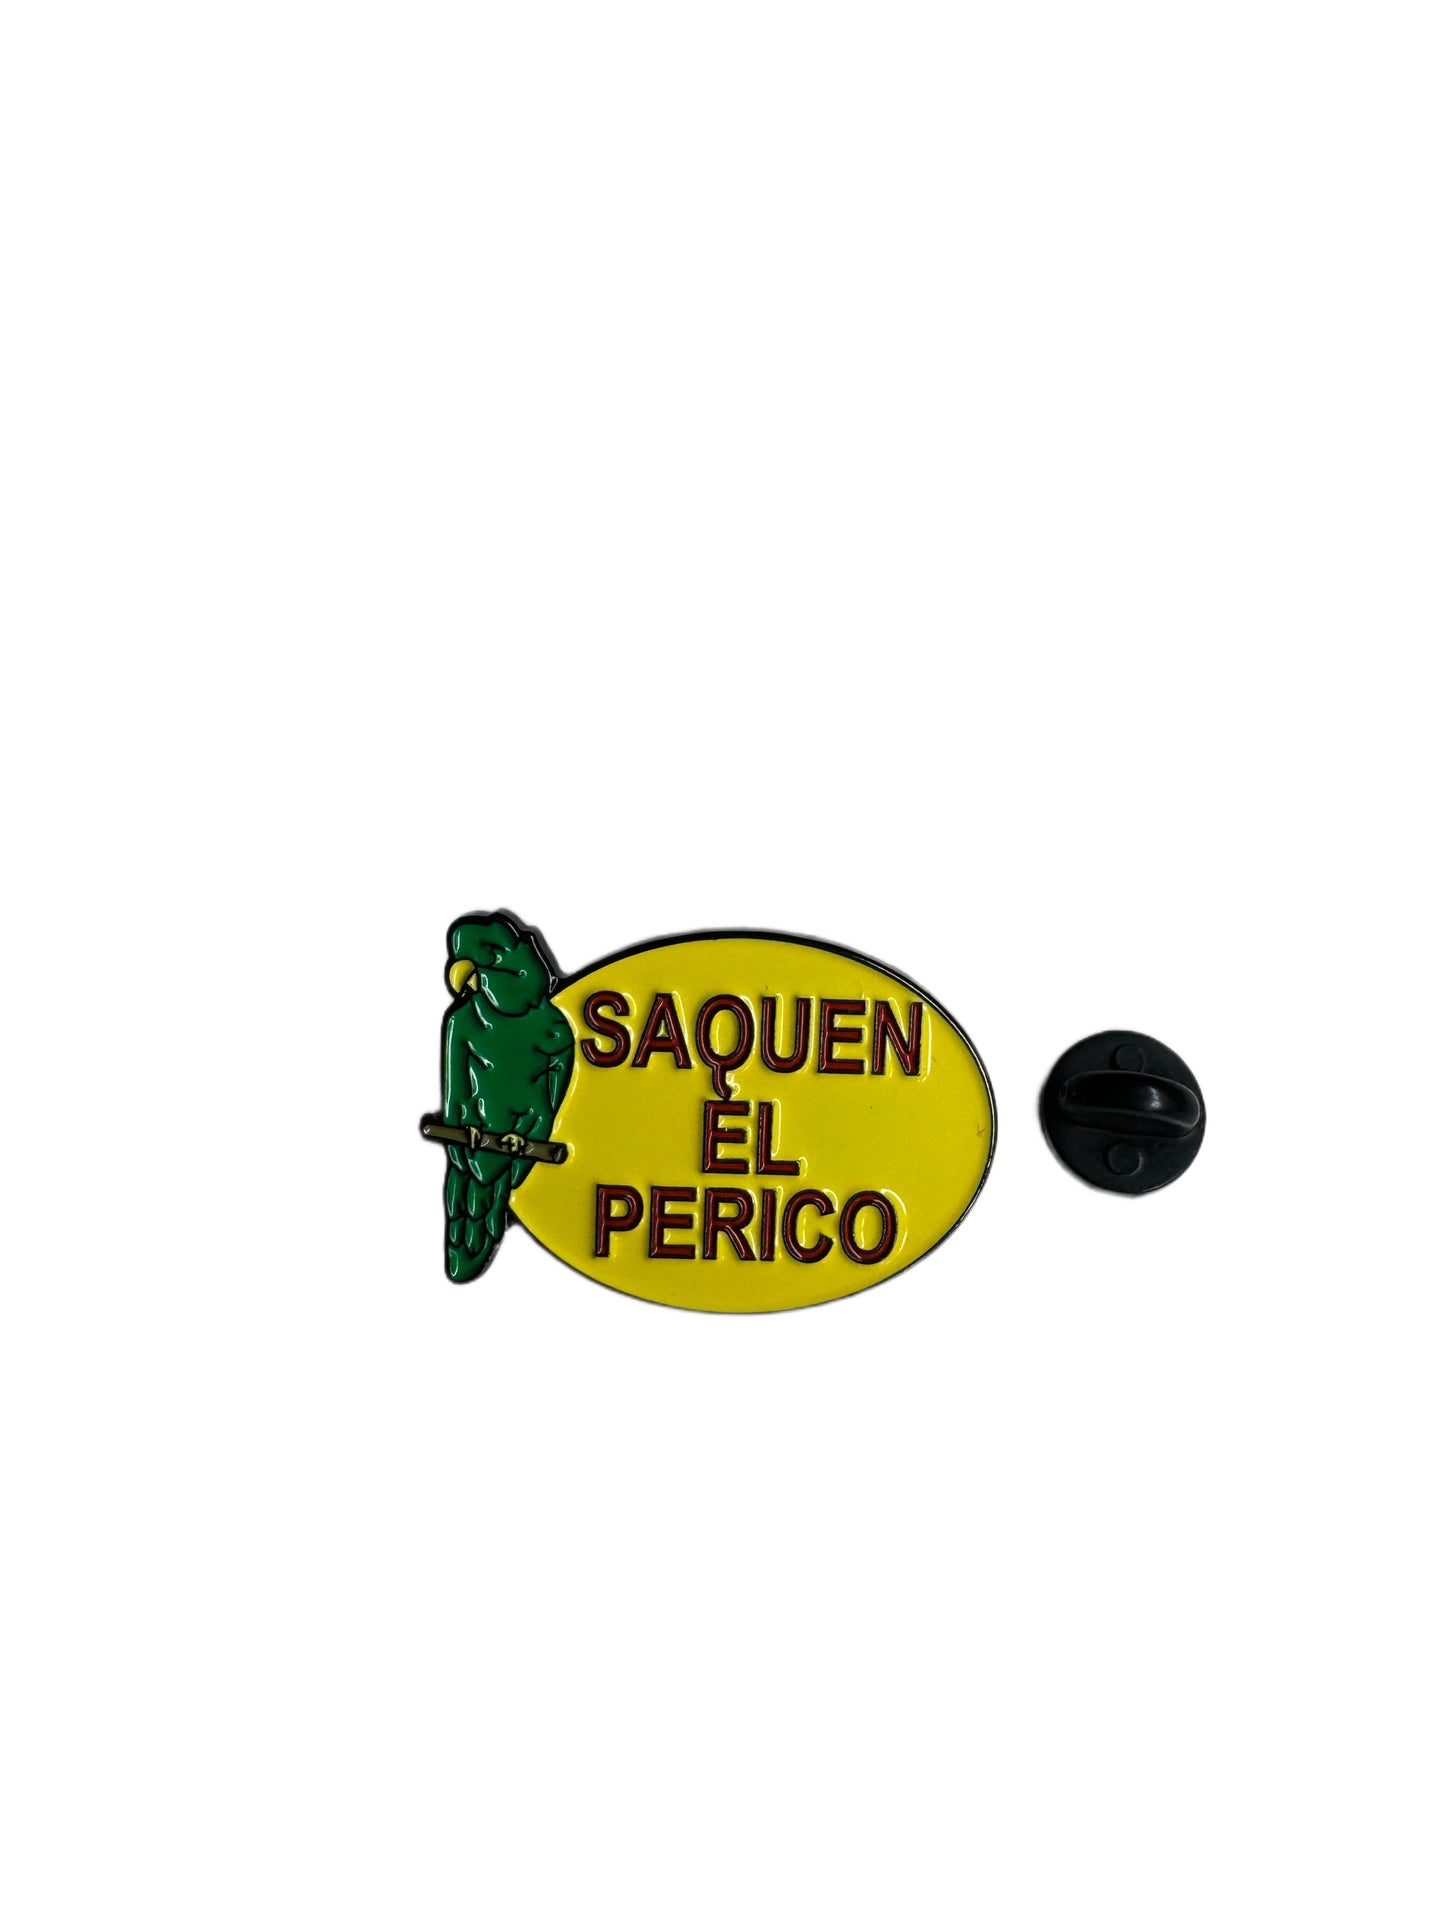 Perico Hat Pin